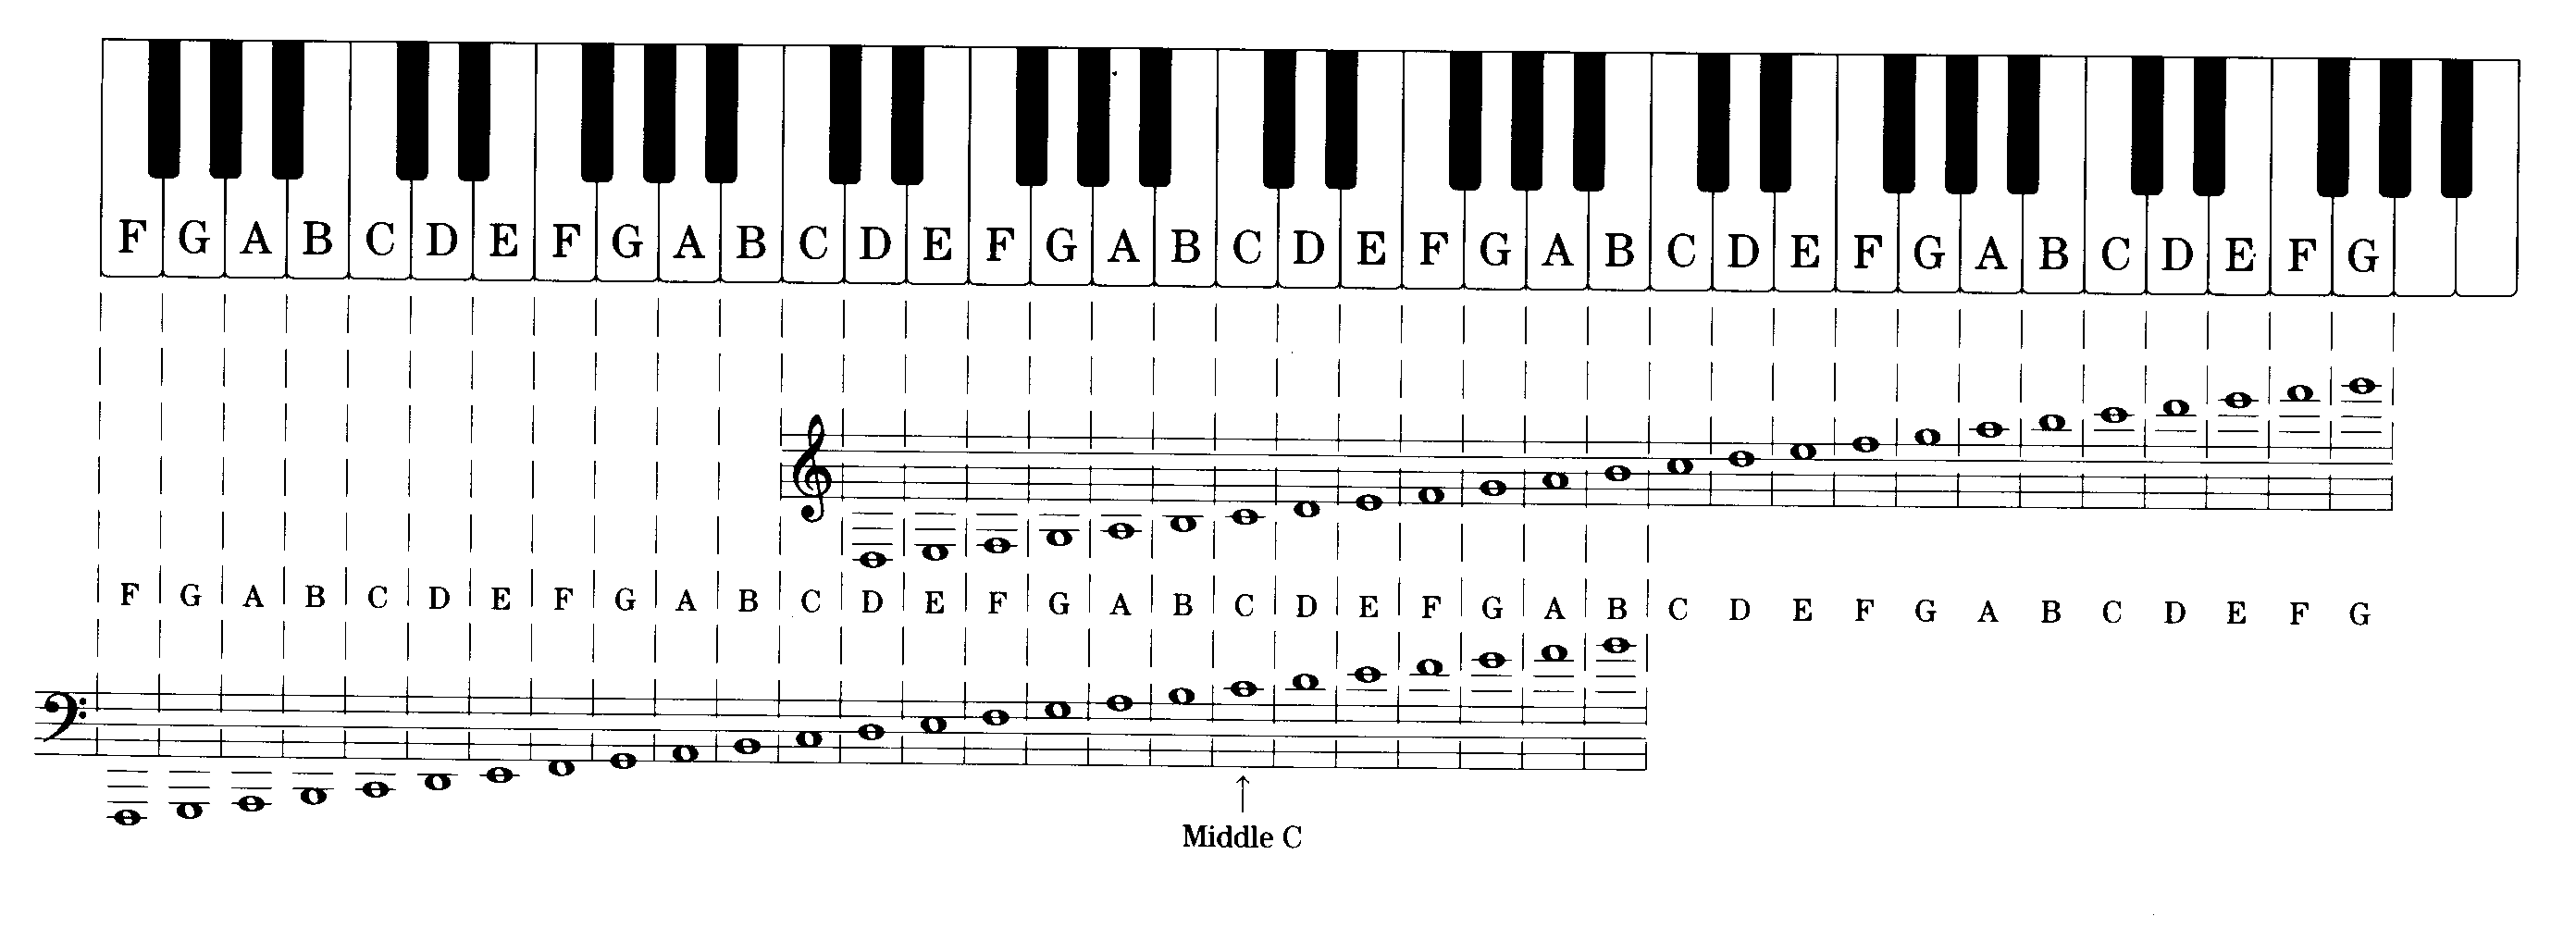 Piano Music Notation Chart